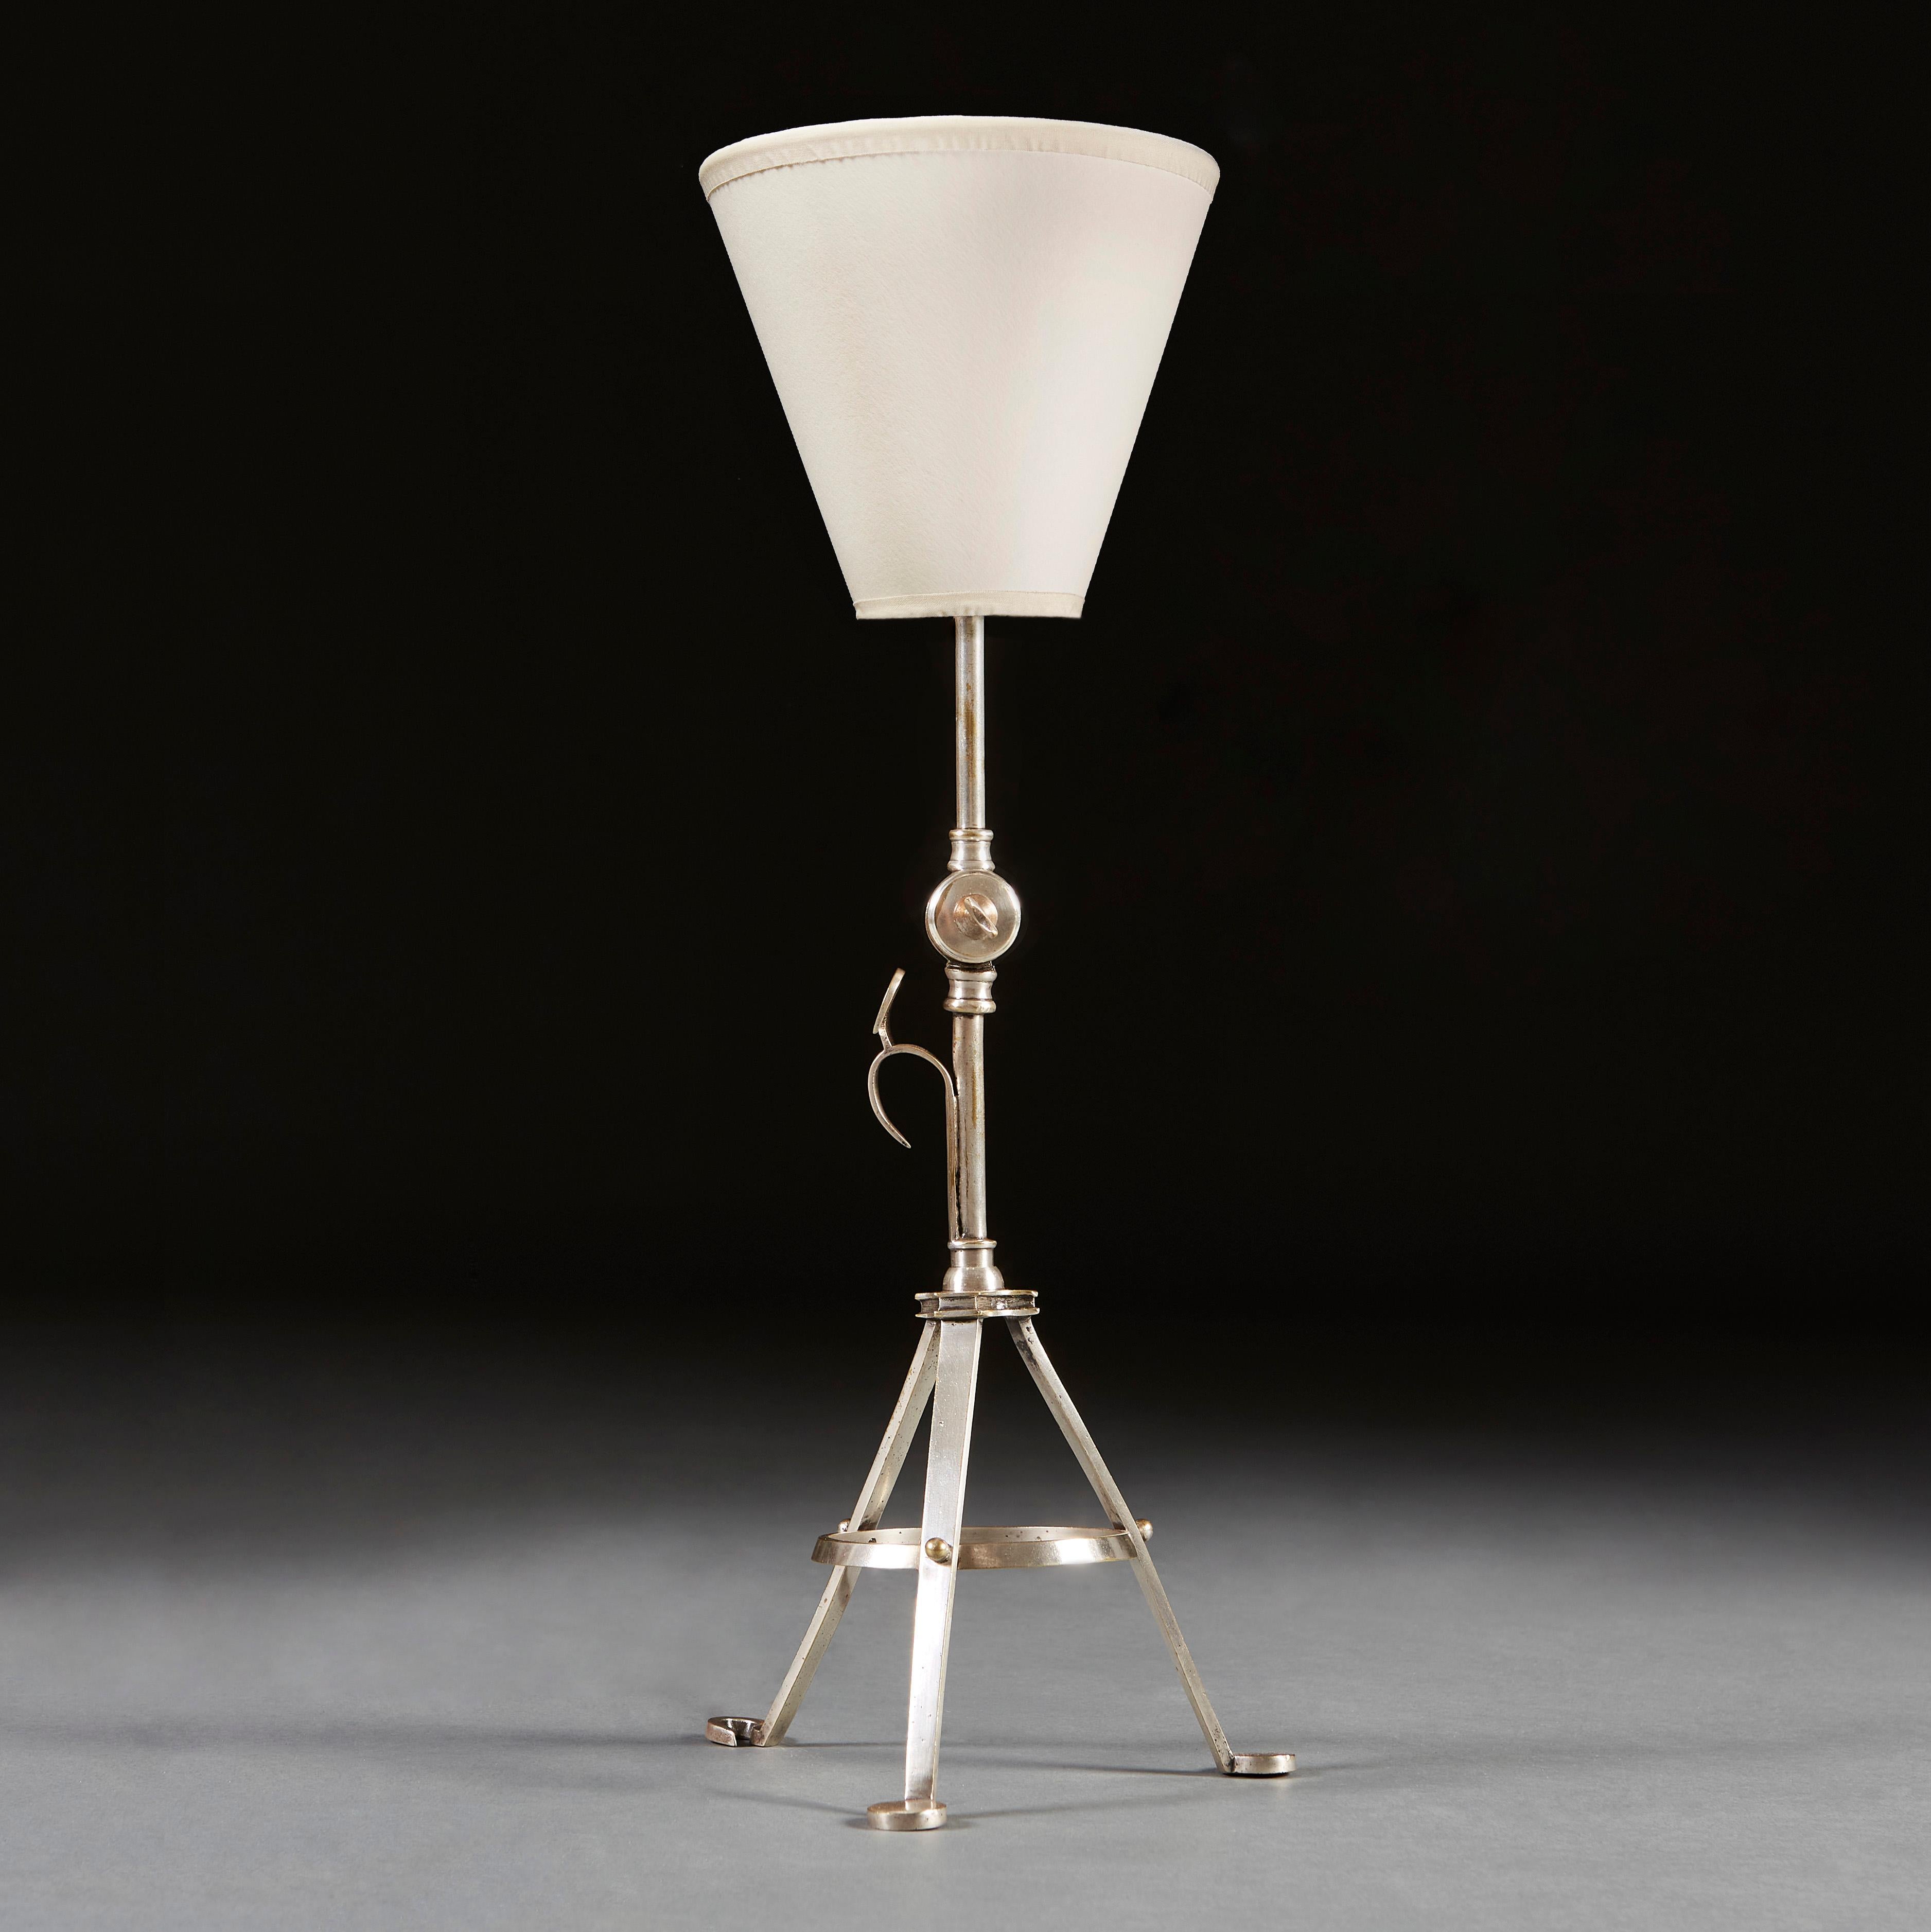 An unusual 19th century tripod lamp by Benson.